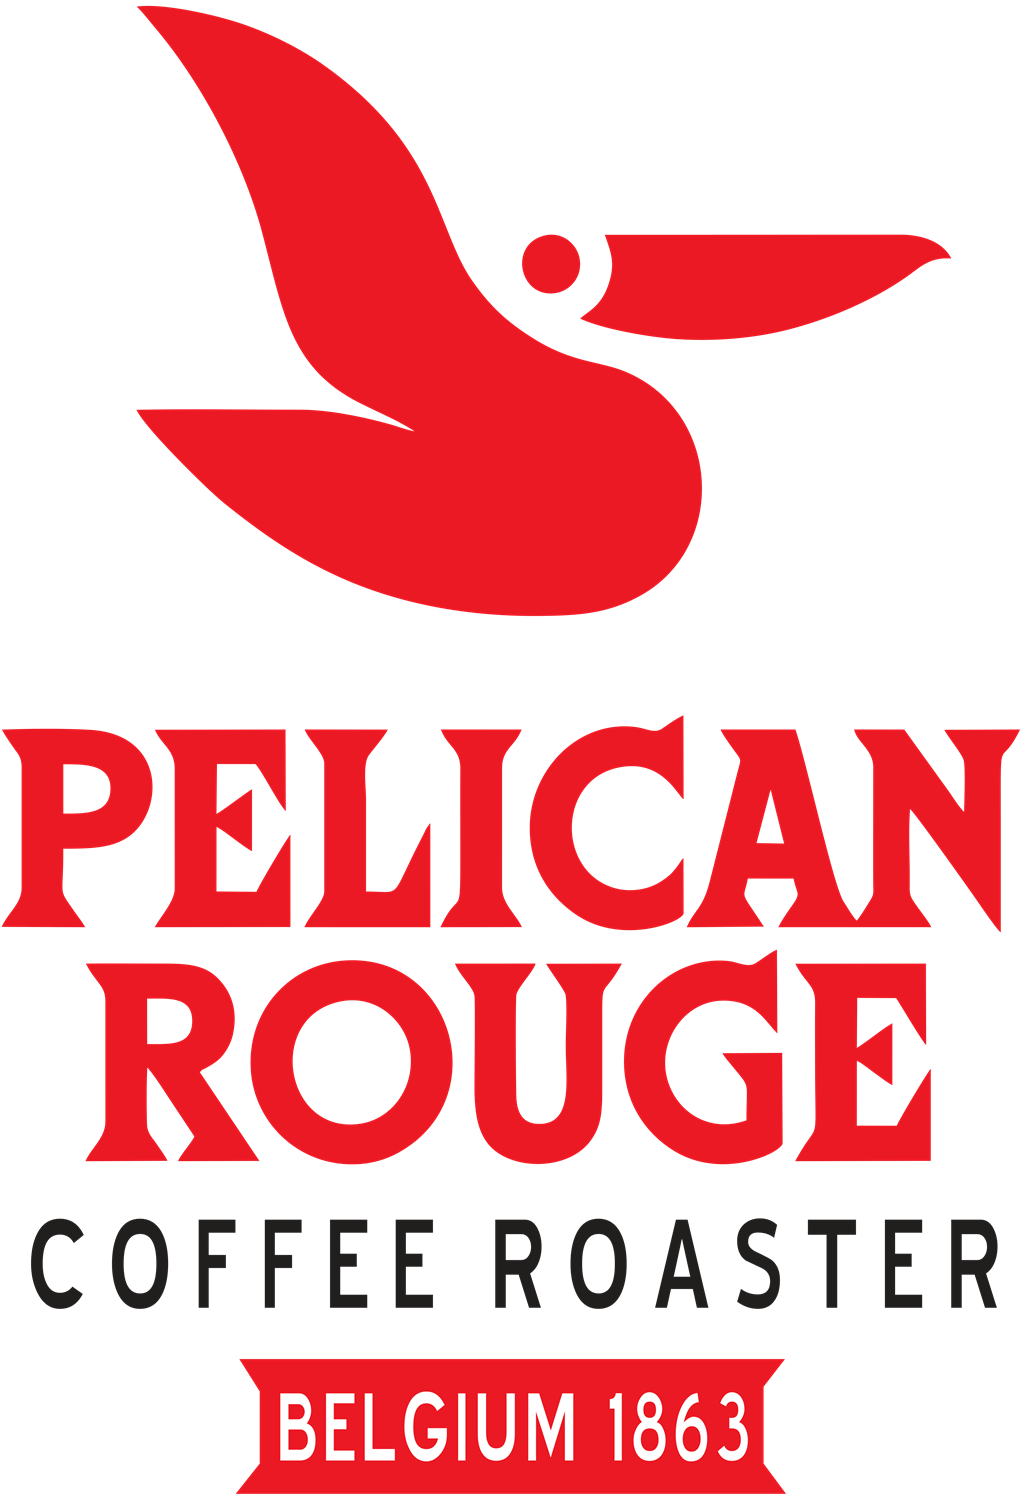 Pelican Rouge logotype, transparent .png, medium, large